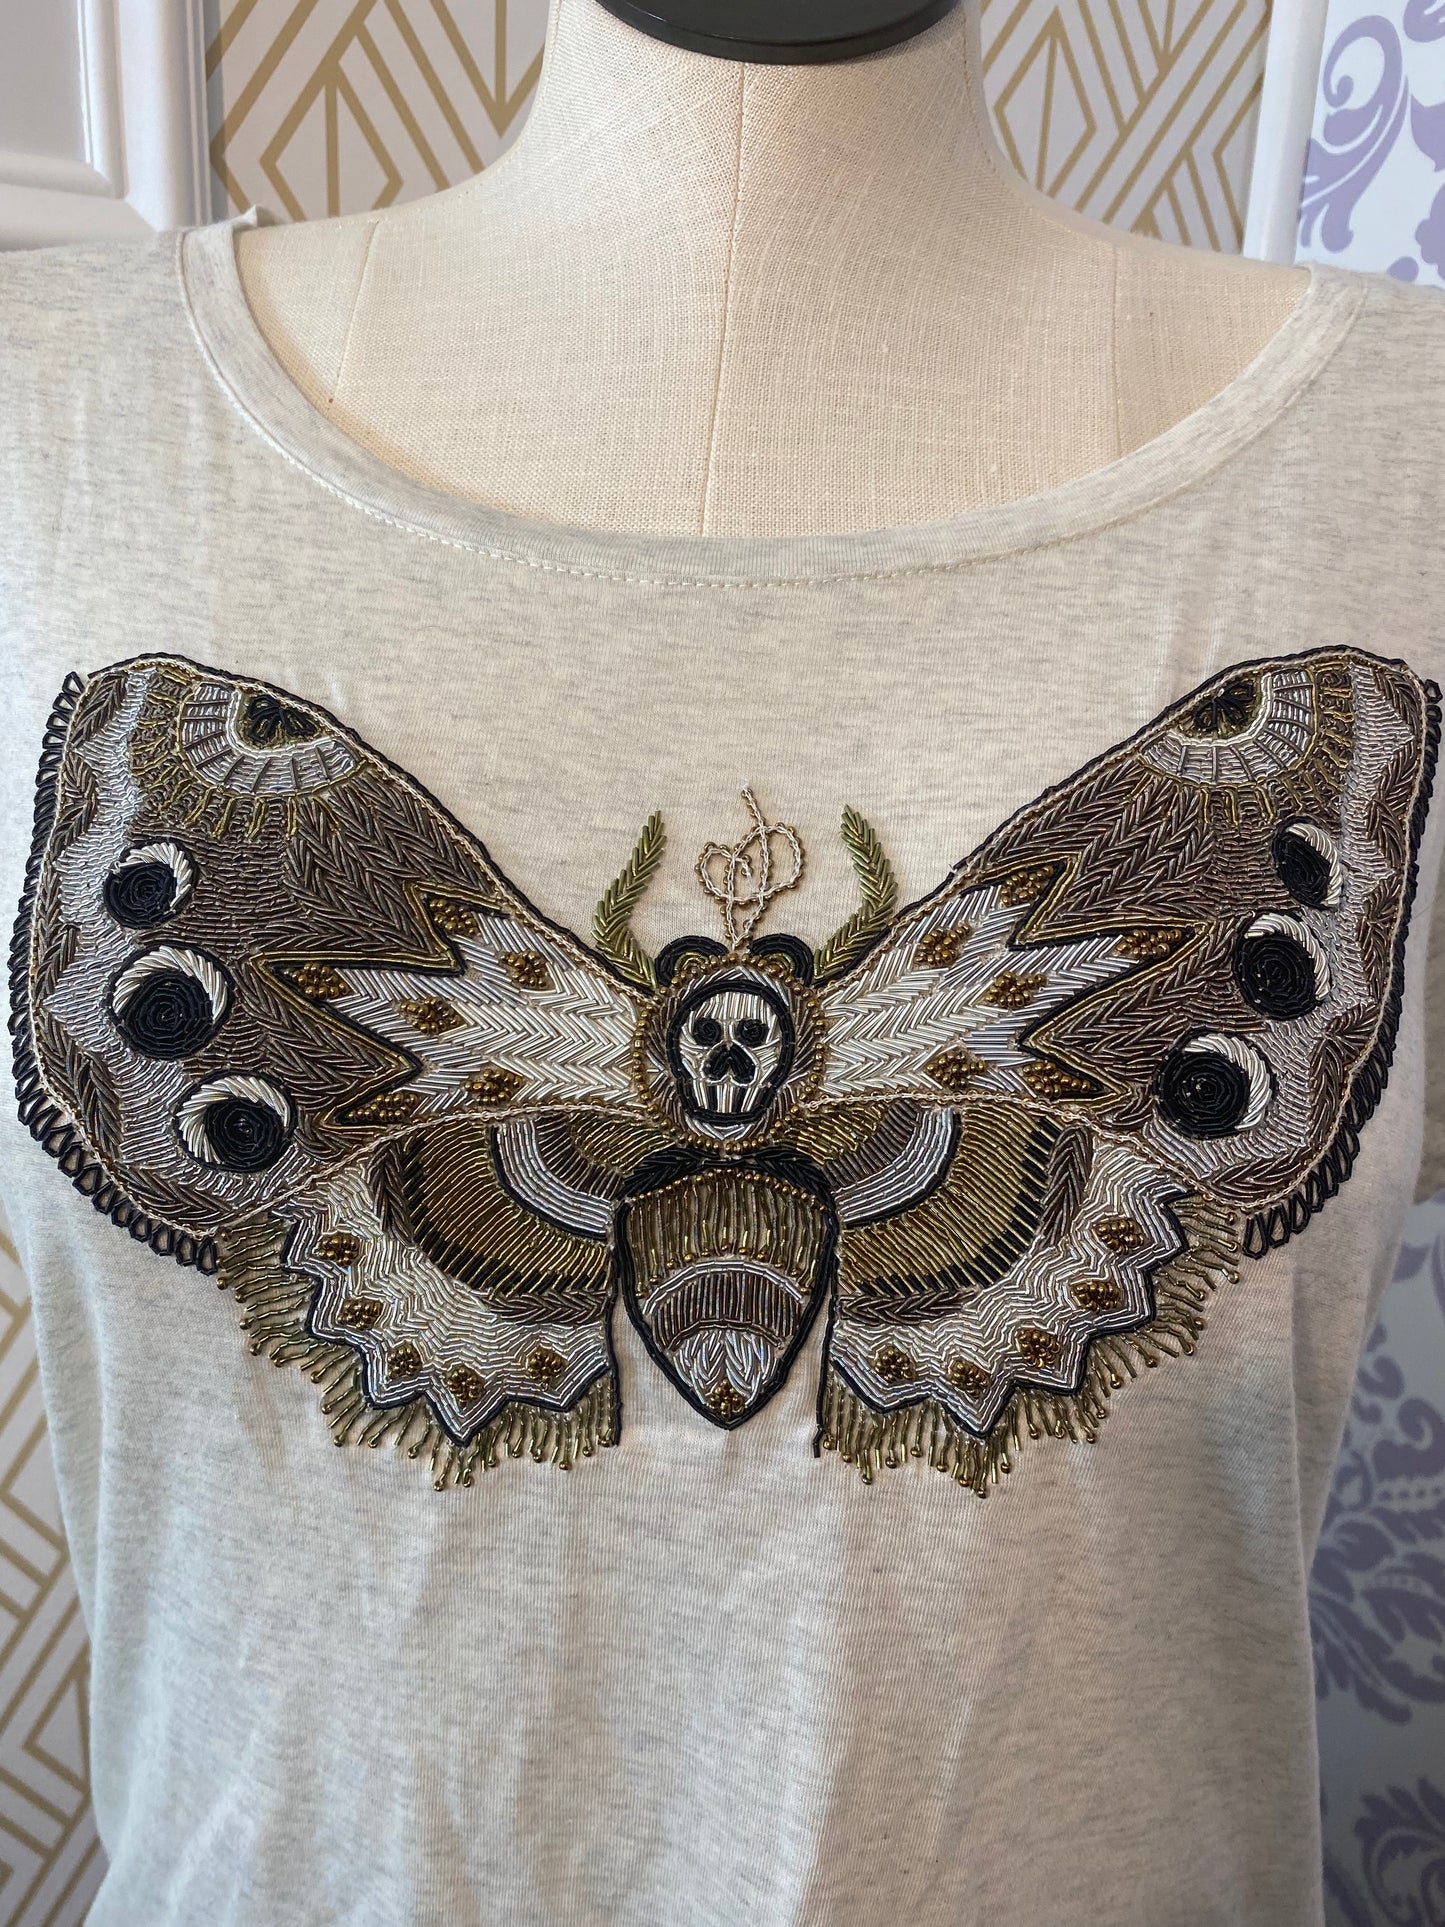 Zadig & Voltaire Tan Heather Butterfly Beaded T-Shirt - Medium